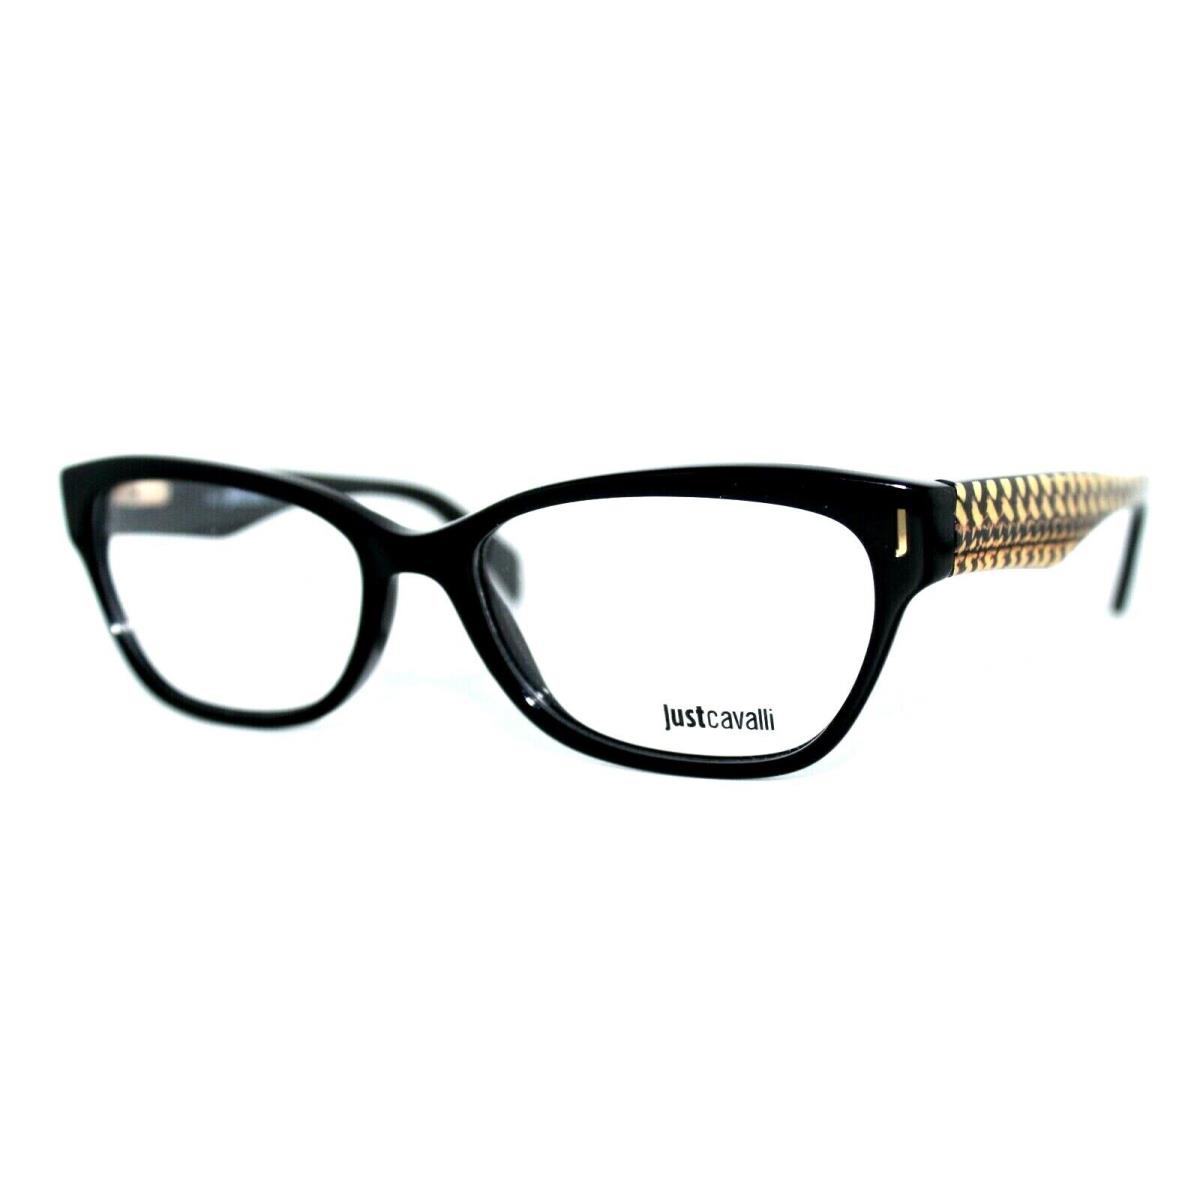 Just Cavalli JC0746 A01 Black Eyeglasses Frames 53-16-135MM W/case